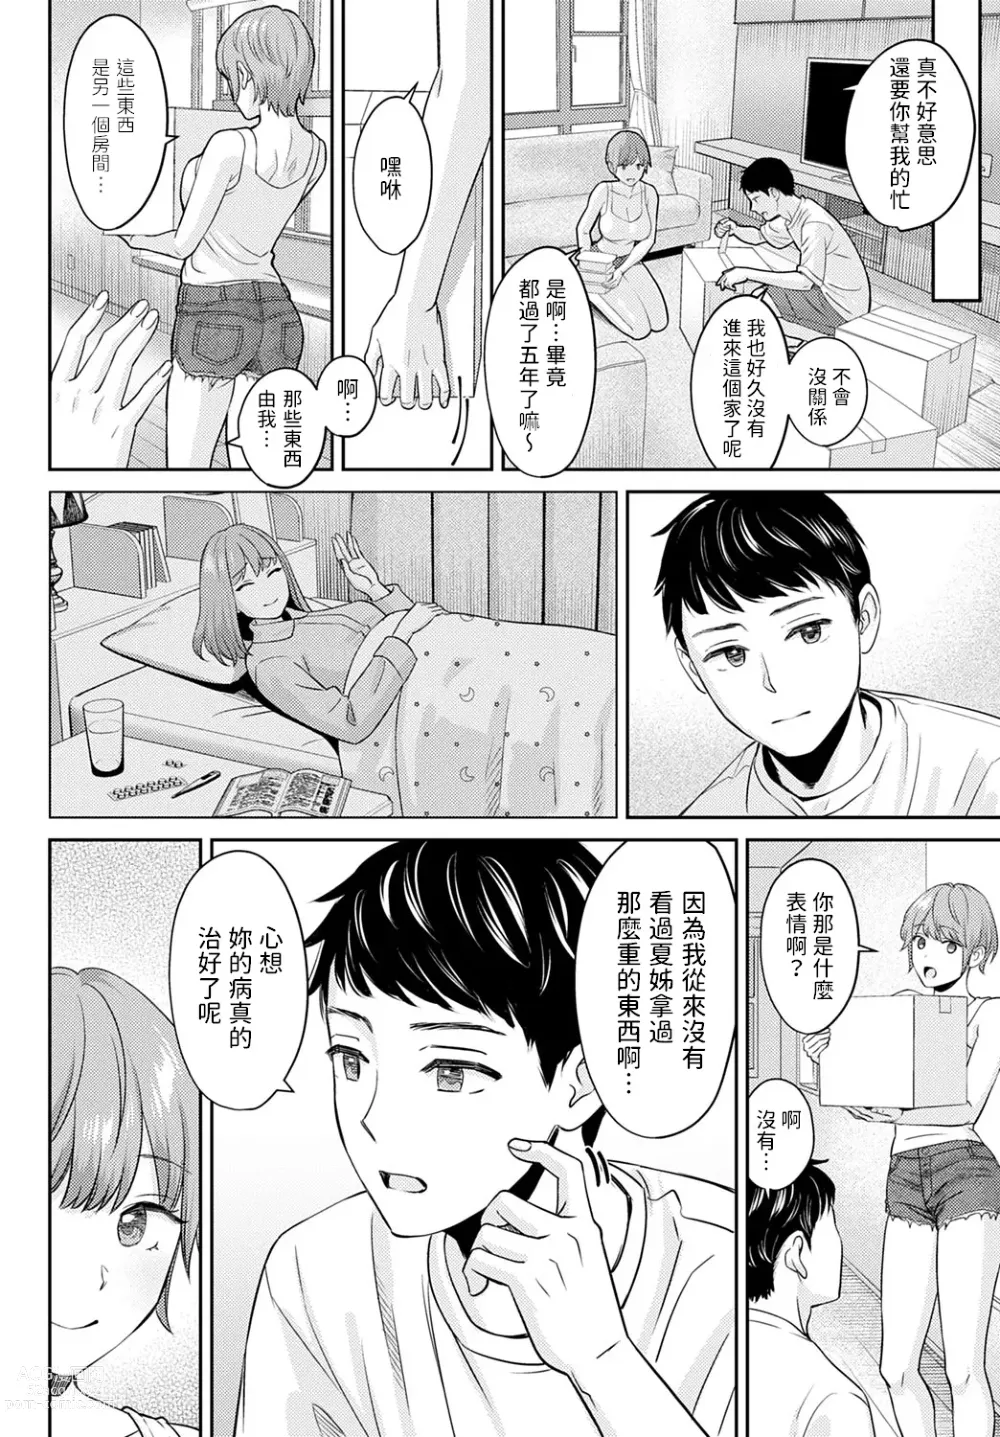 Page 4 of manga Saikai - reunion + restart